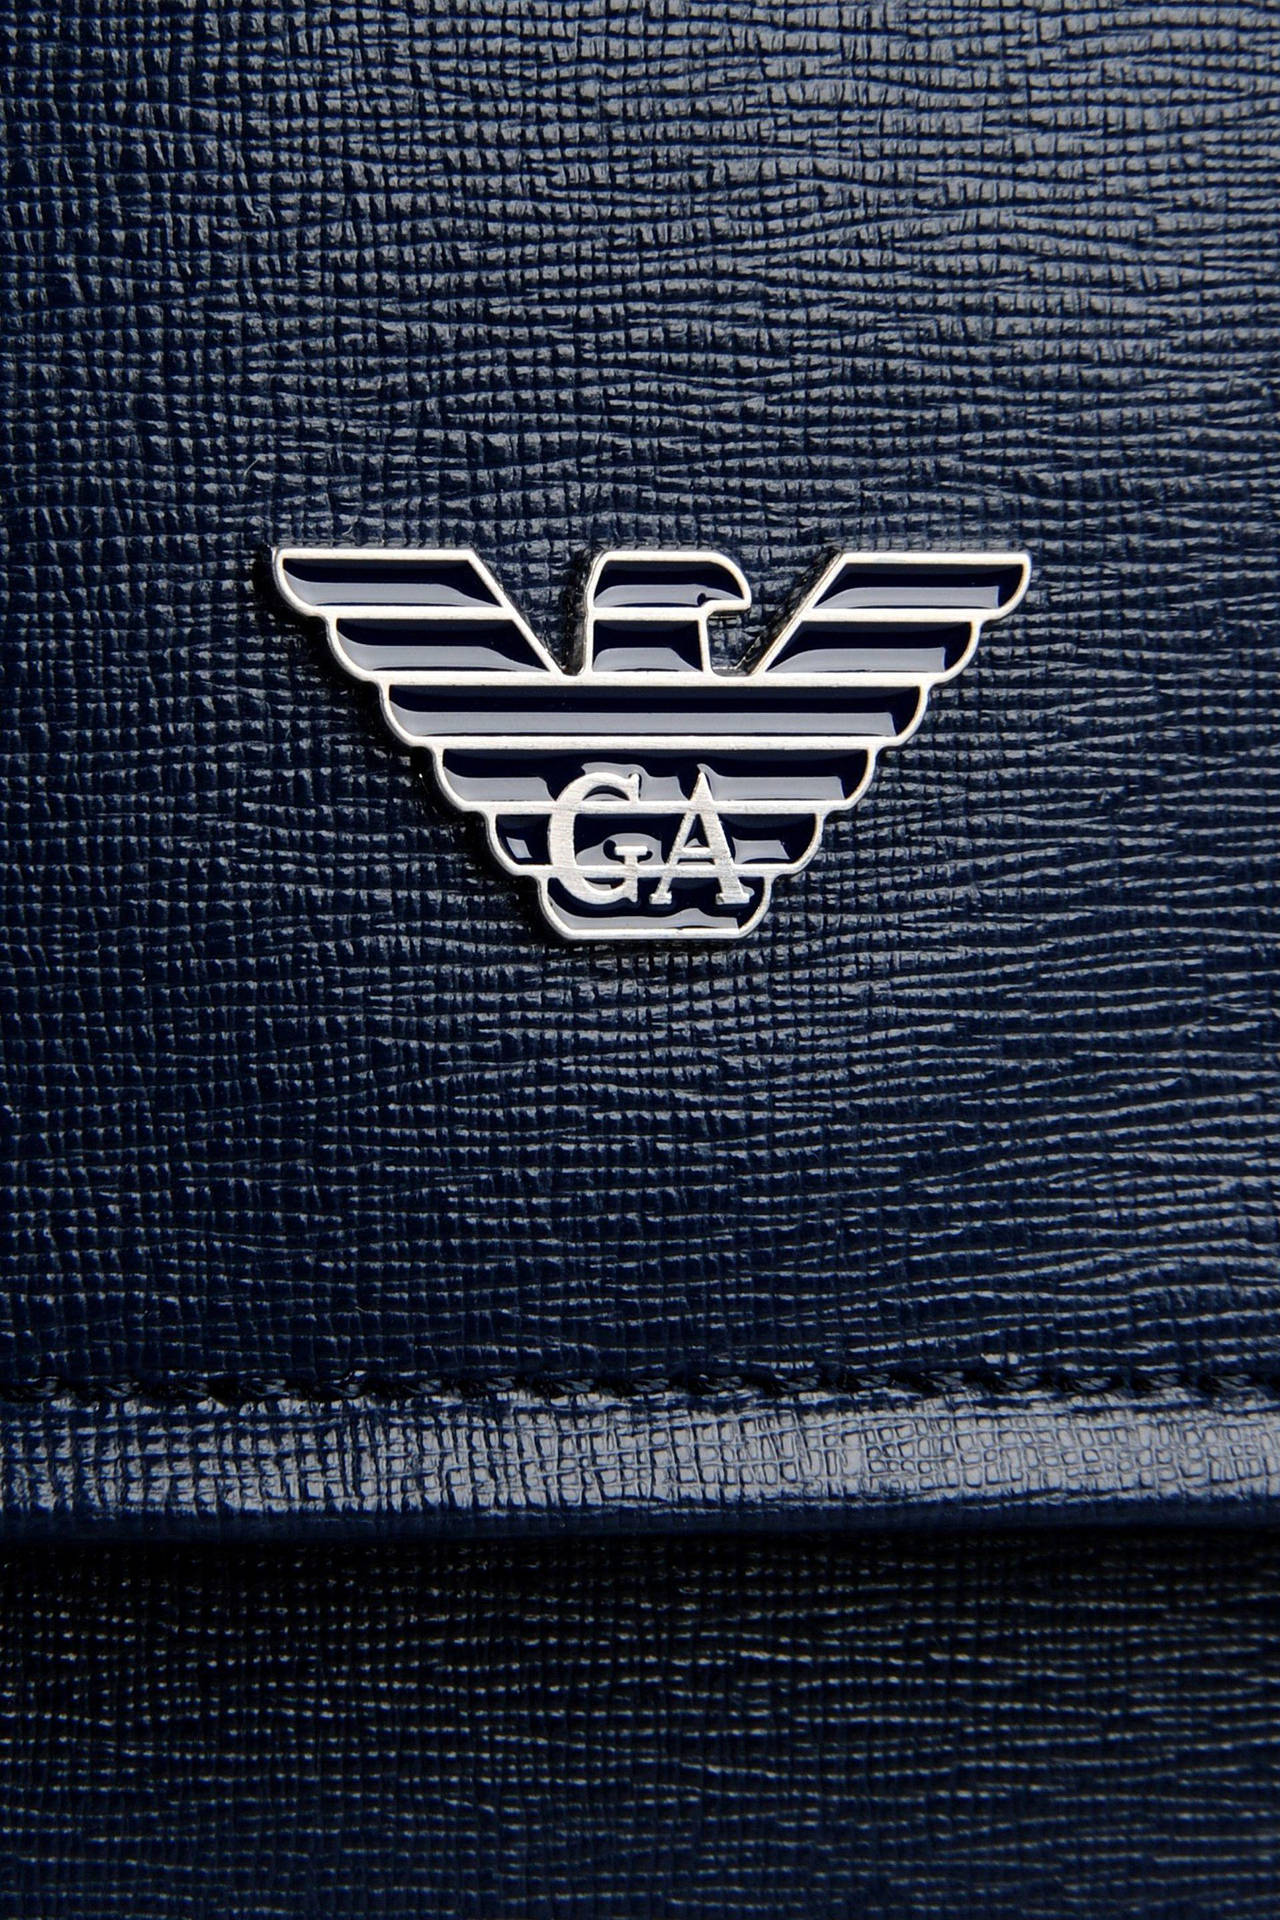 Giorgio Armani Emblem Wallpaper